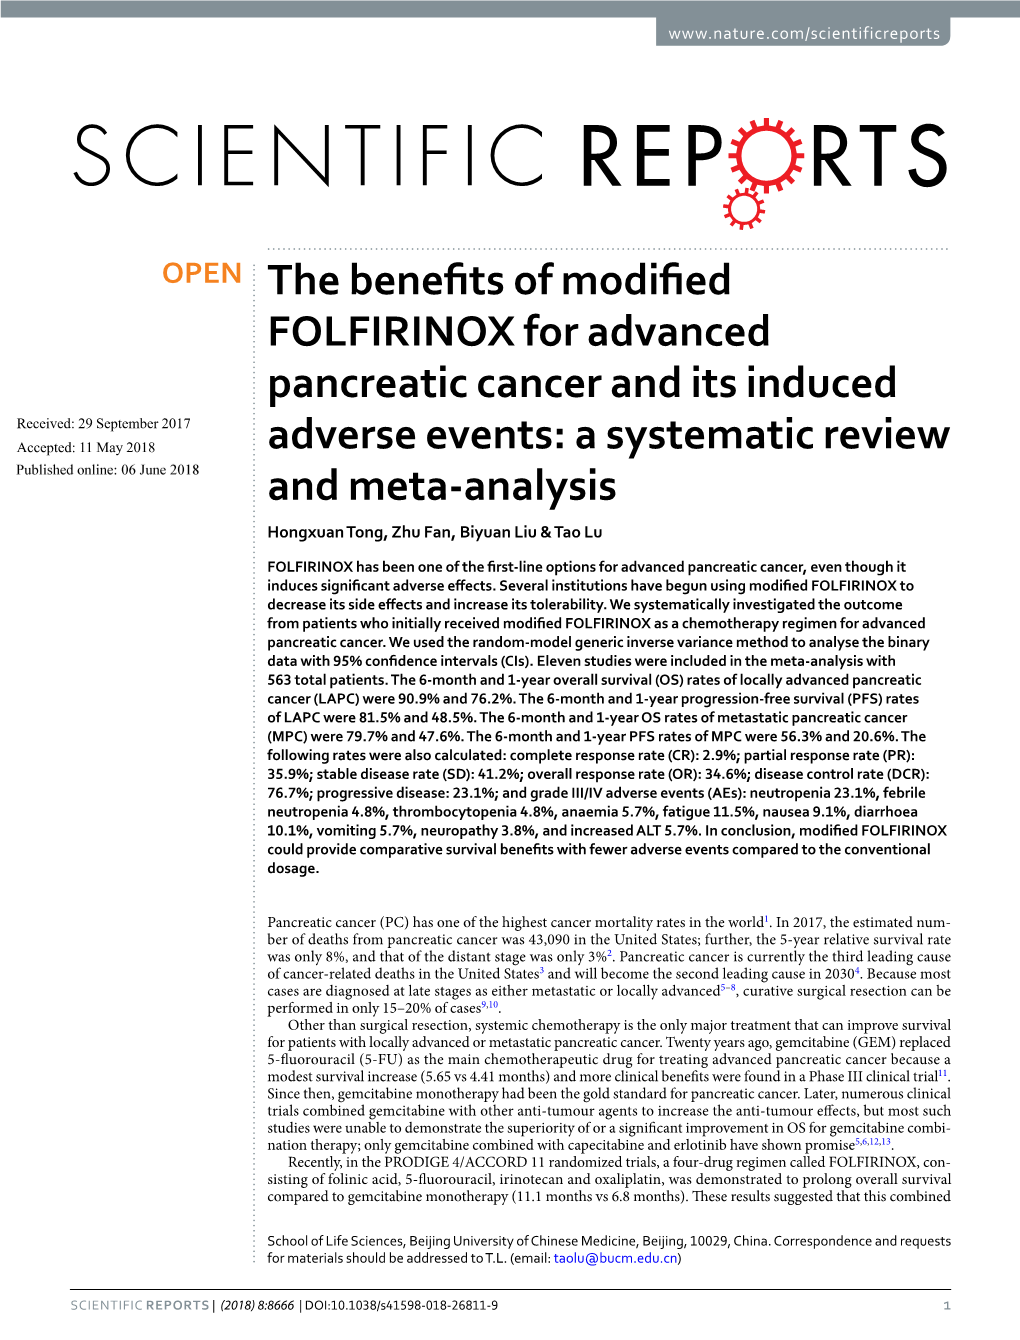 The Benefits of Modified FOLFIRINOX for Advanced Pancreatic Cancer And